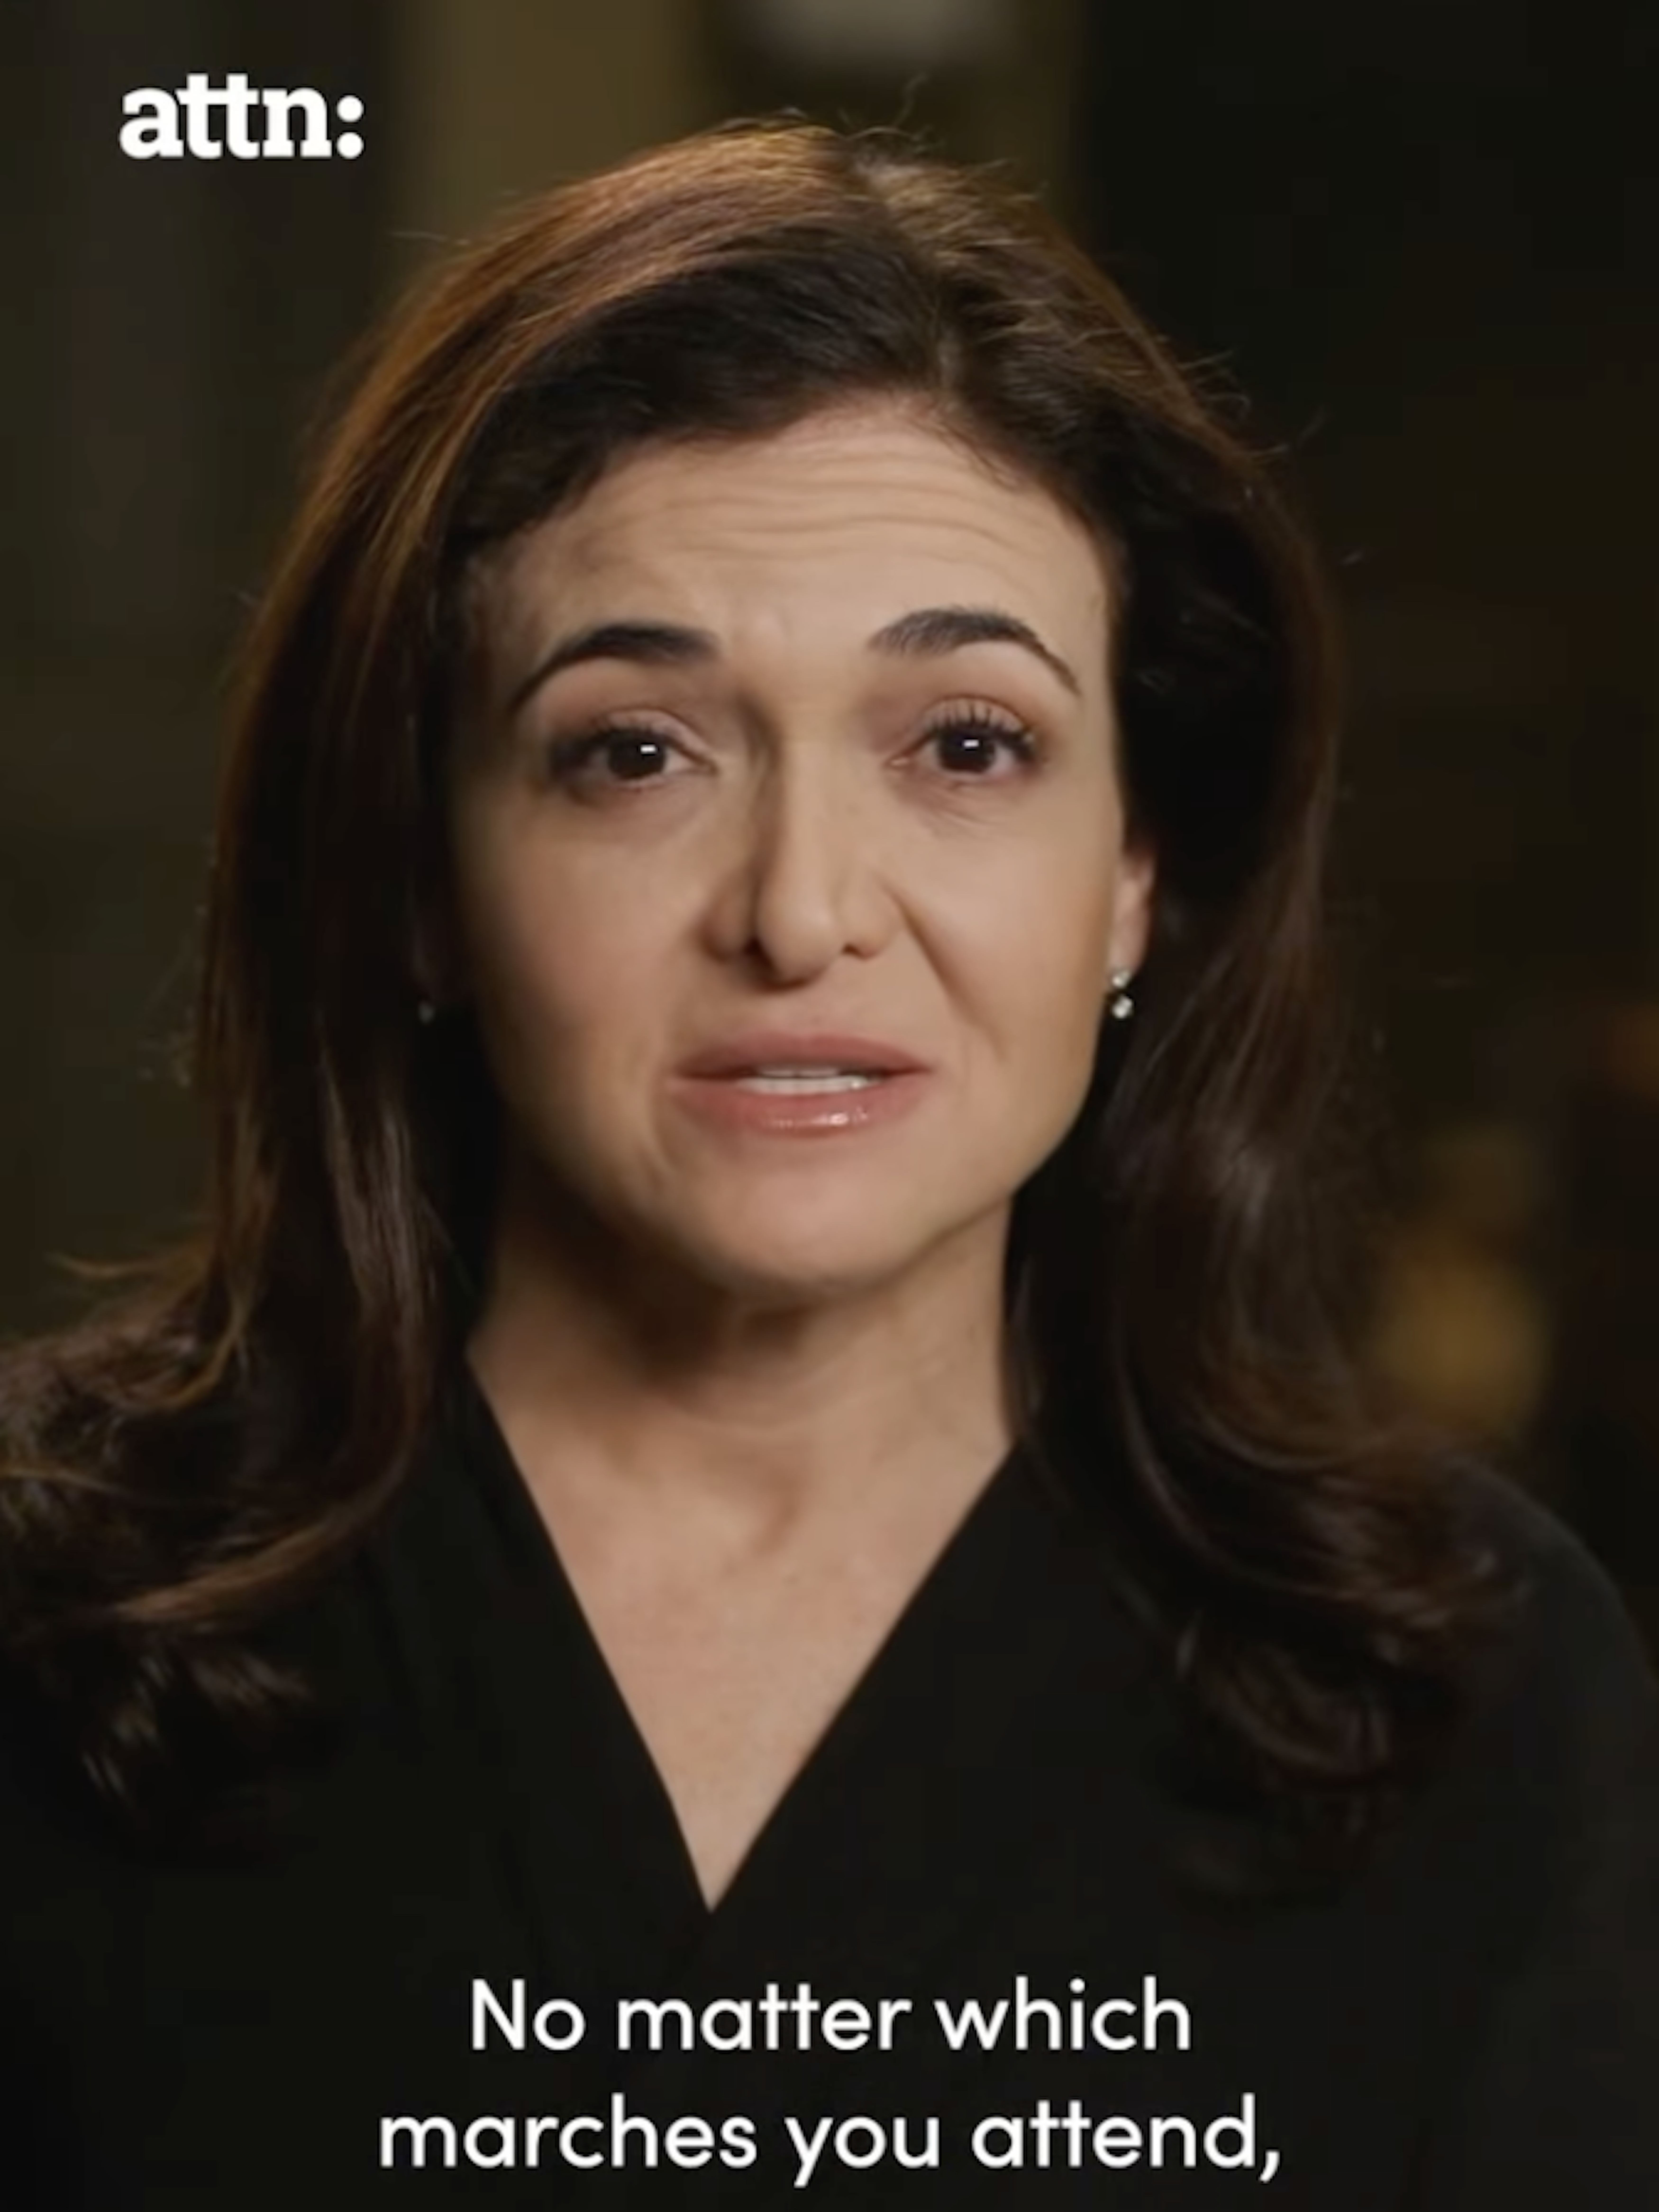 Sheryl Sandberg speaks in an Instagram video